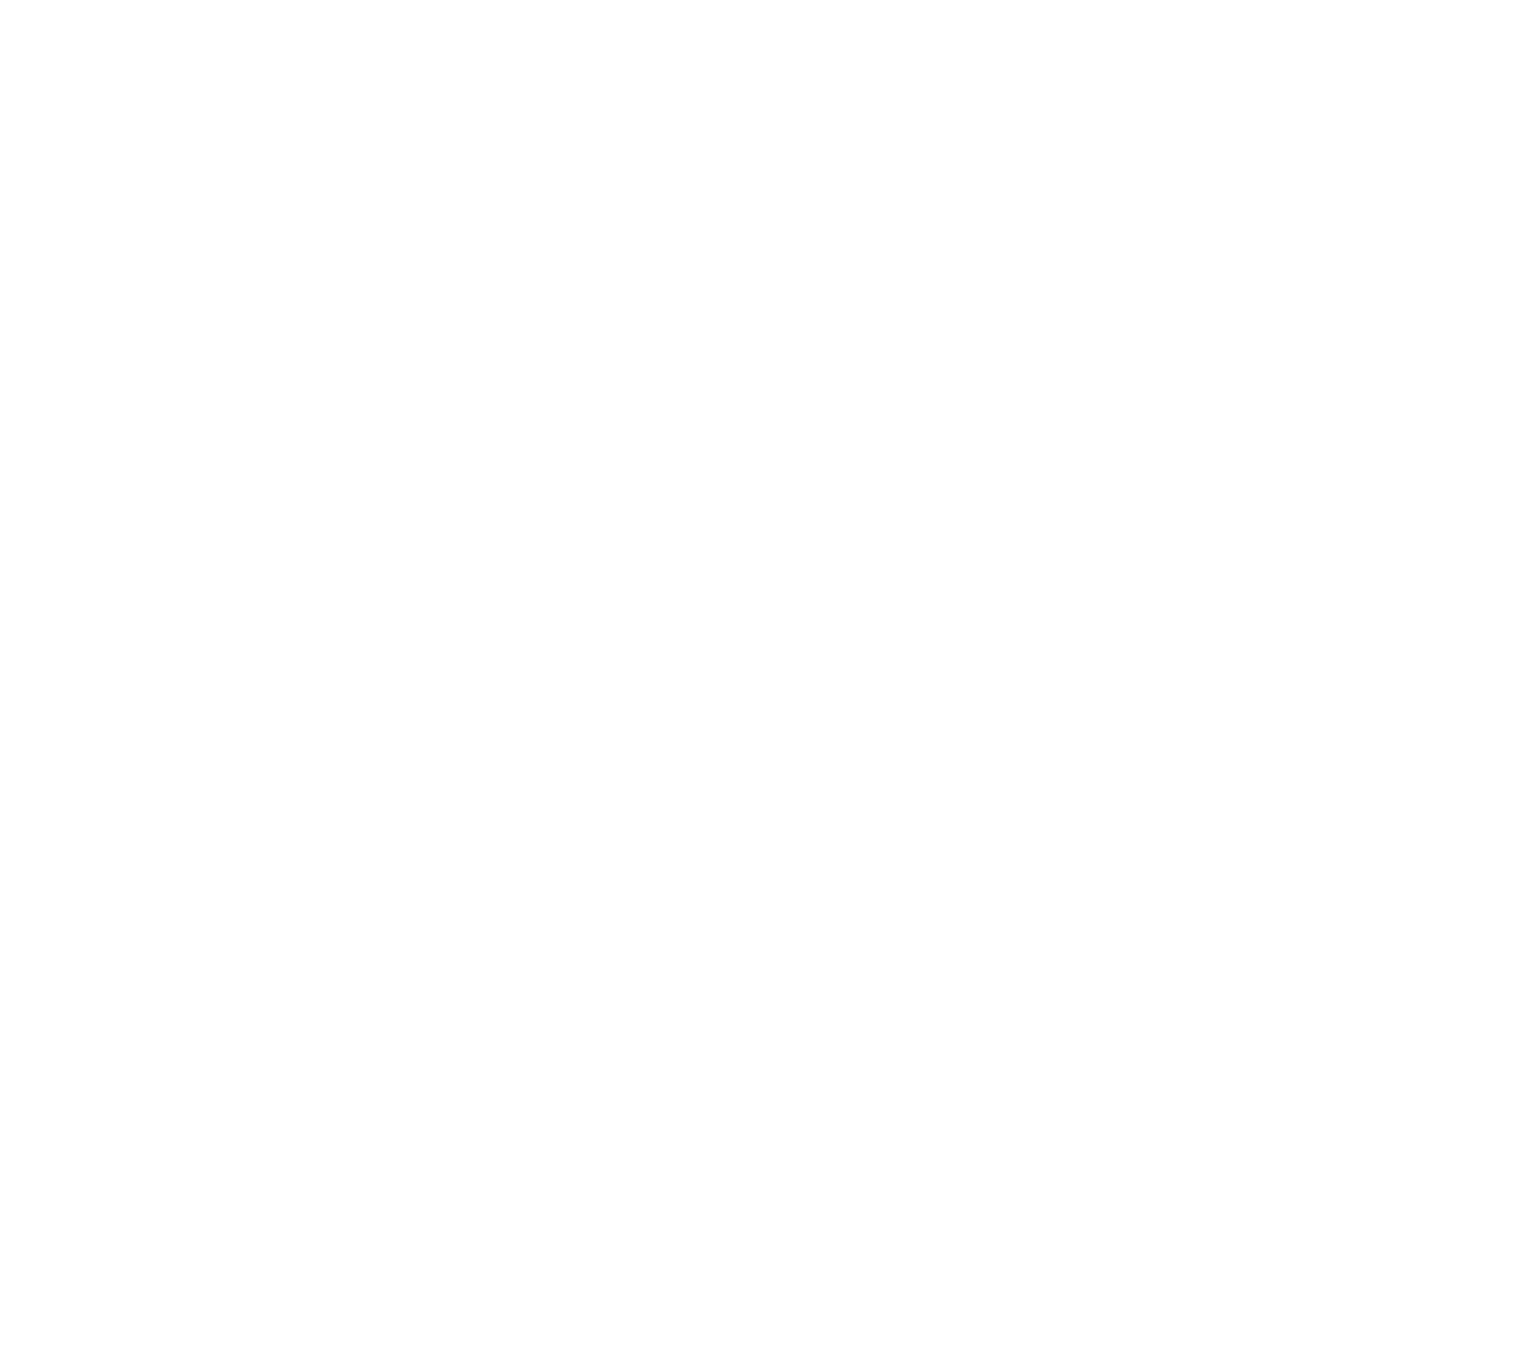 FMC logo for dark backgrounds (transparent PNG)